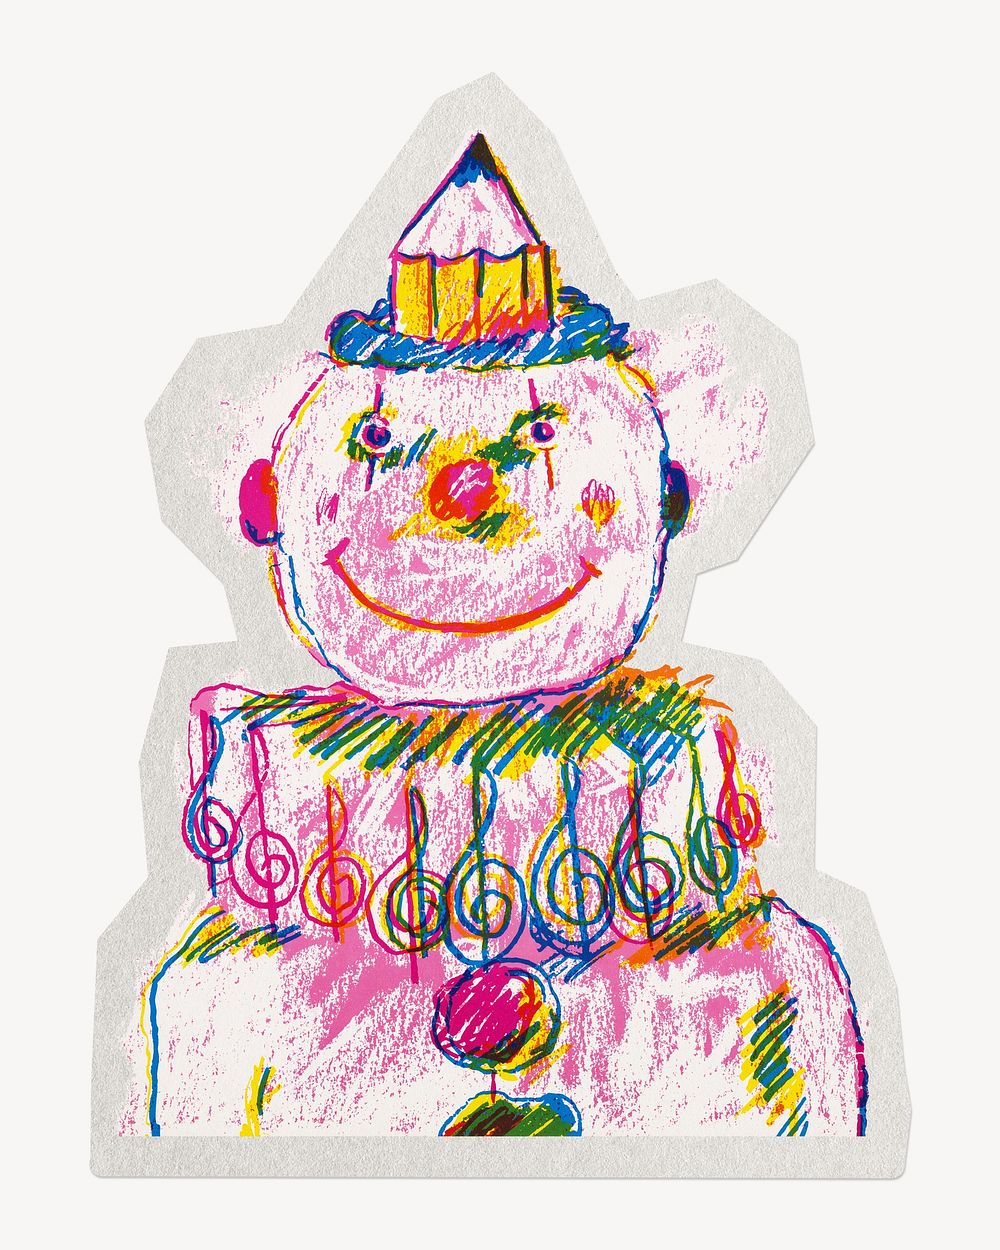 Clown doodle festive paper element with white border 